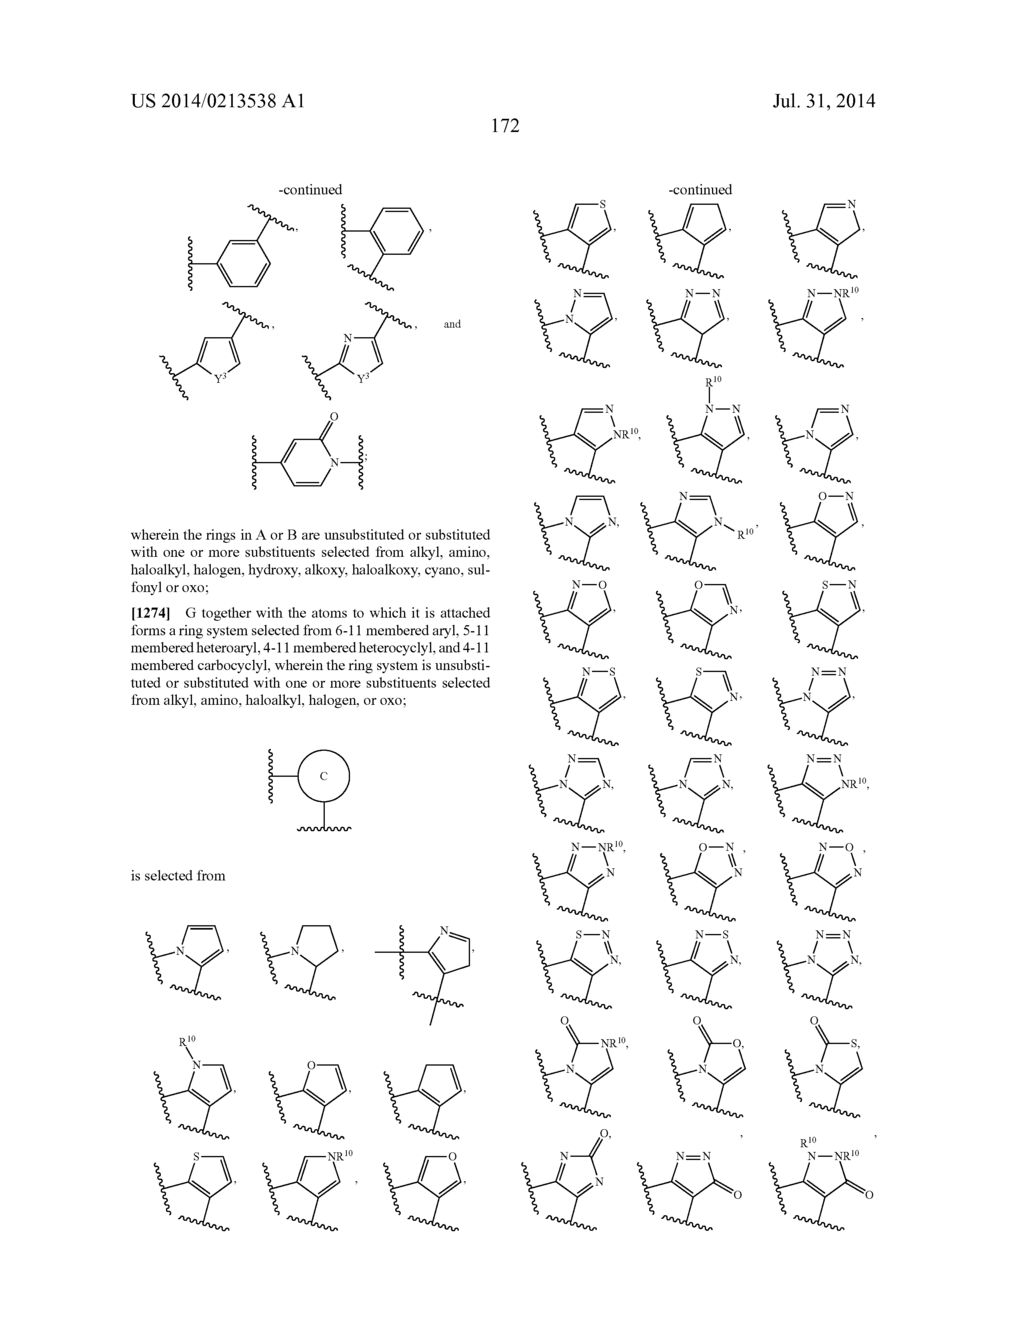 LYSOPHOSPHATIDIC ACID RECEPTOR ANTAGONISTS - diagram, schematic, and image 173